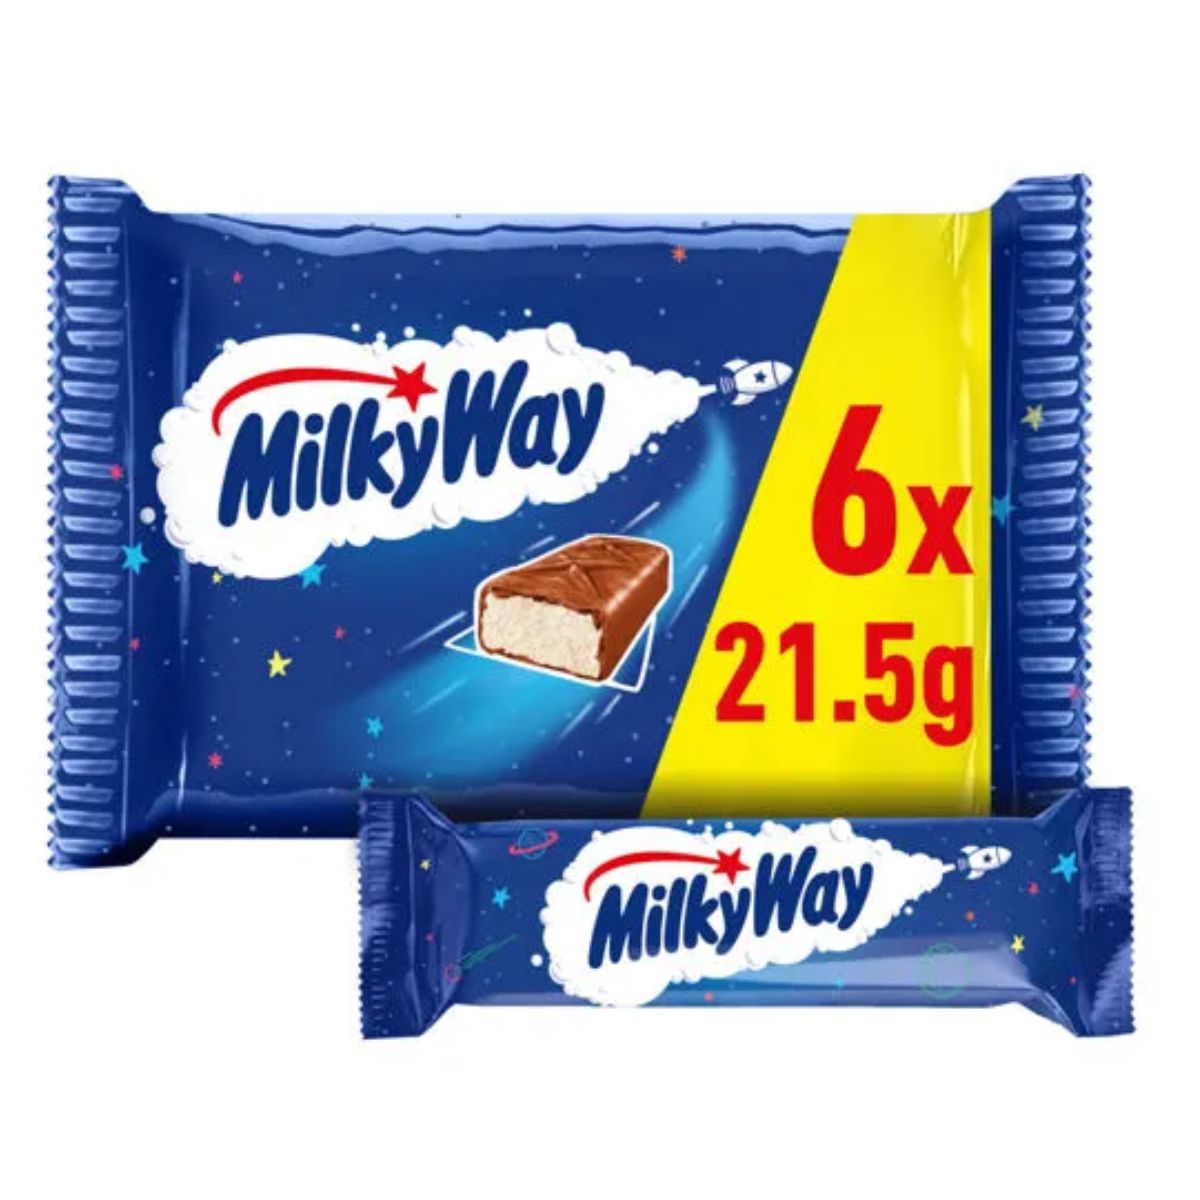 MilkyWay - Multipack - 6 x 21.5g chocolate bar.